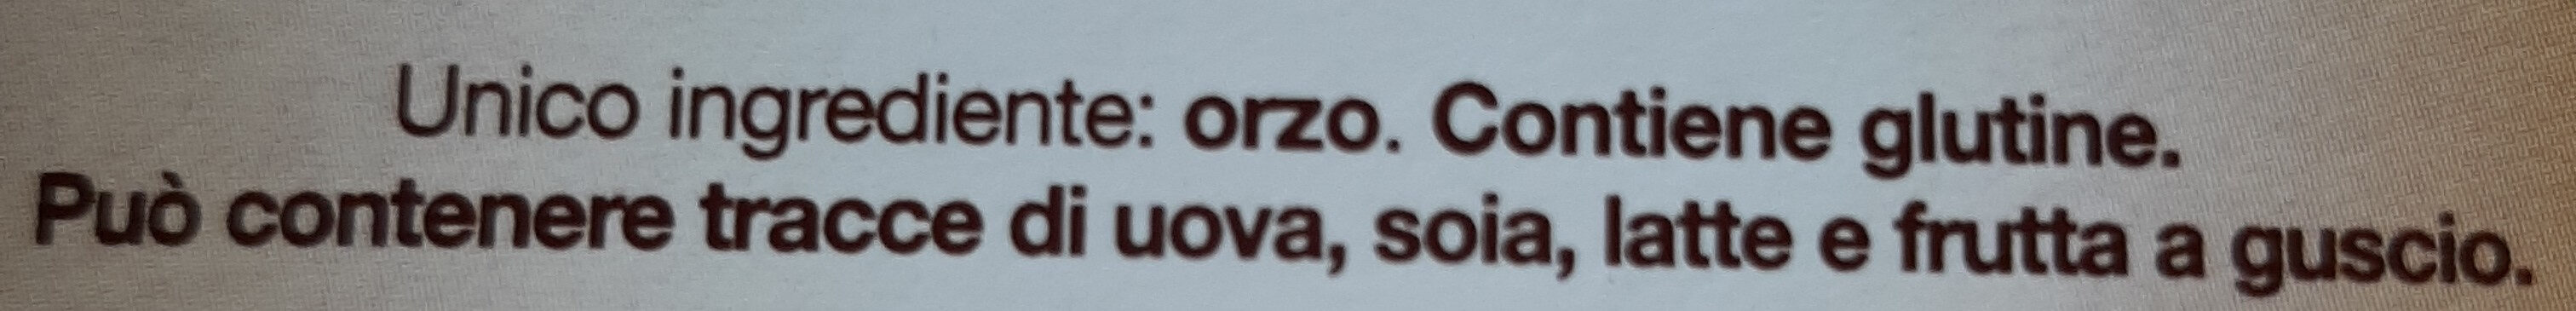 Orzo Bimbo capsule - Ingredienti